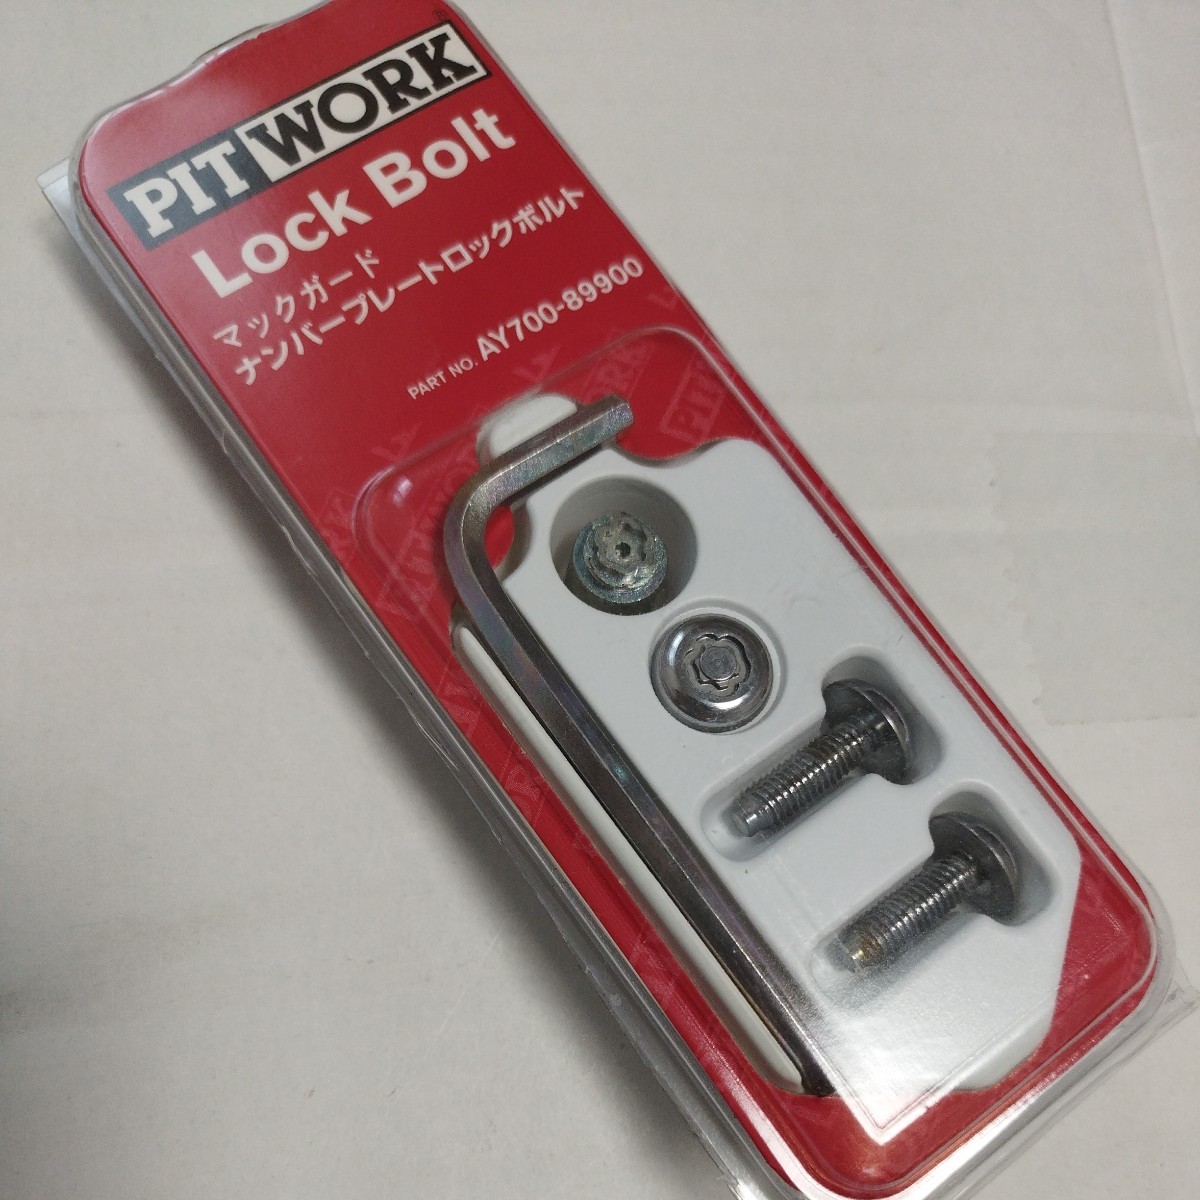  Nissan original PITWORK LockBolt McGuard number plate lock bolt AY700-89900 all-purpose 